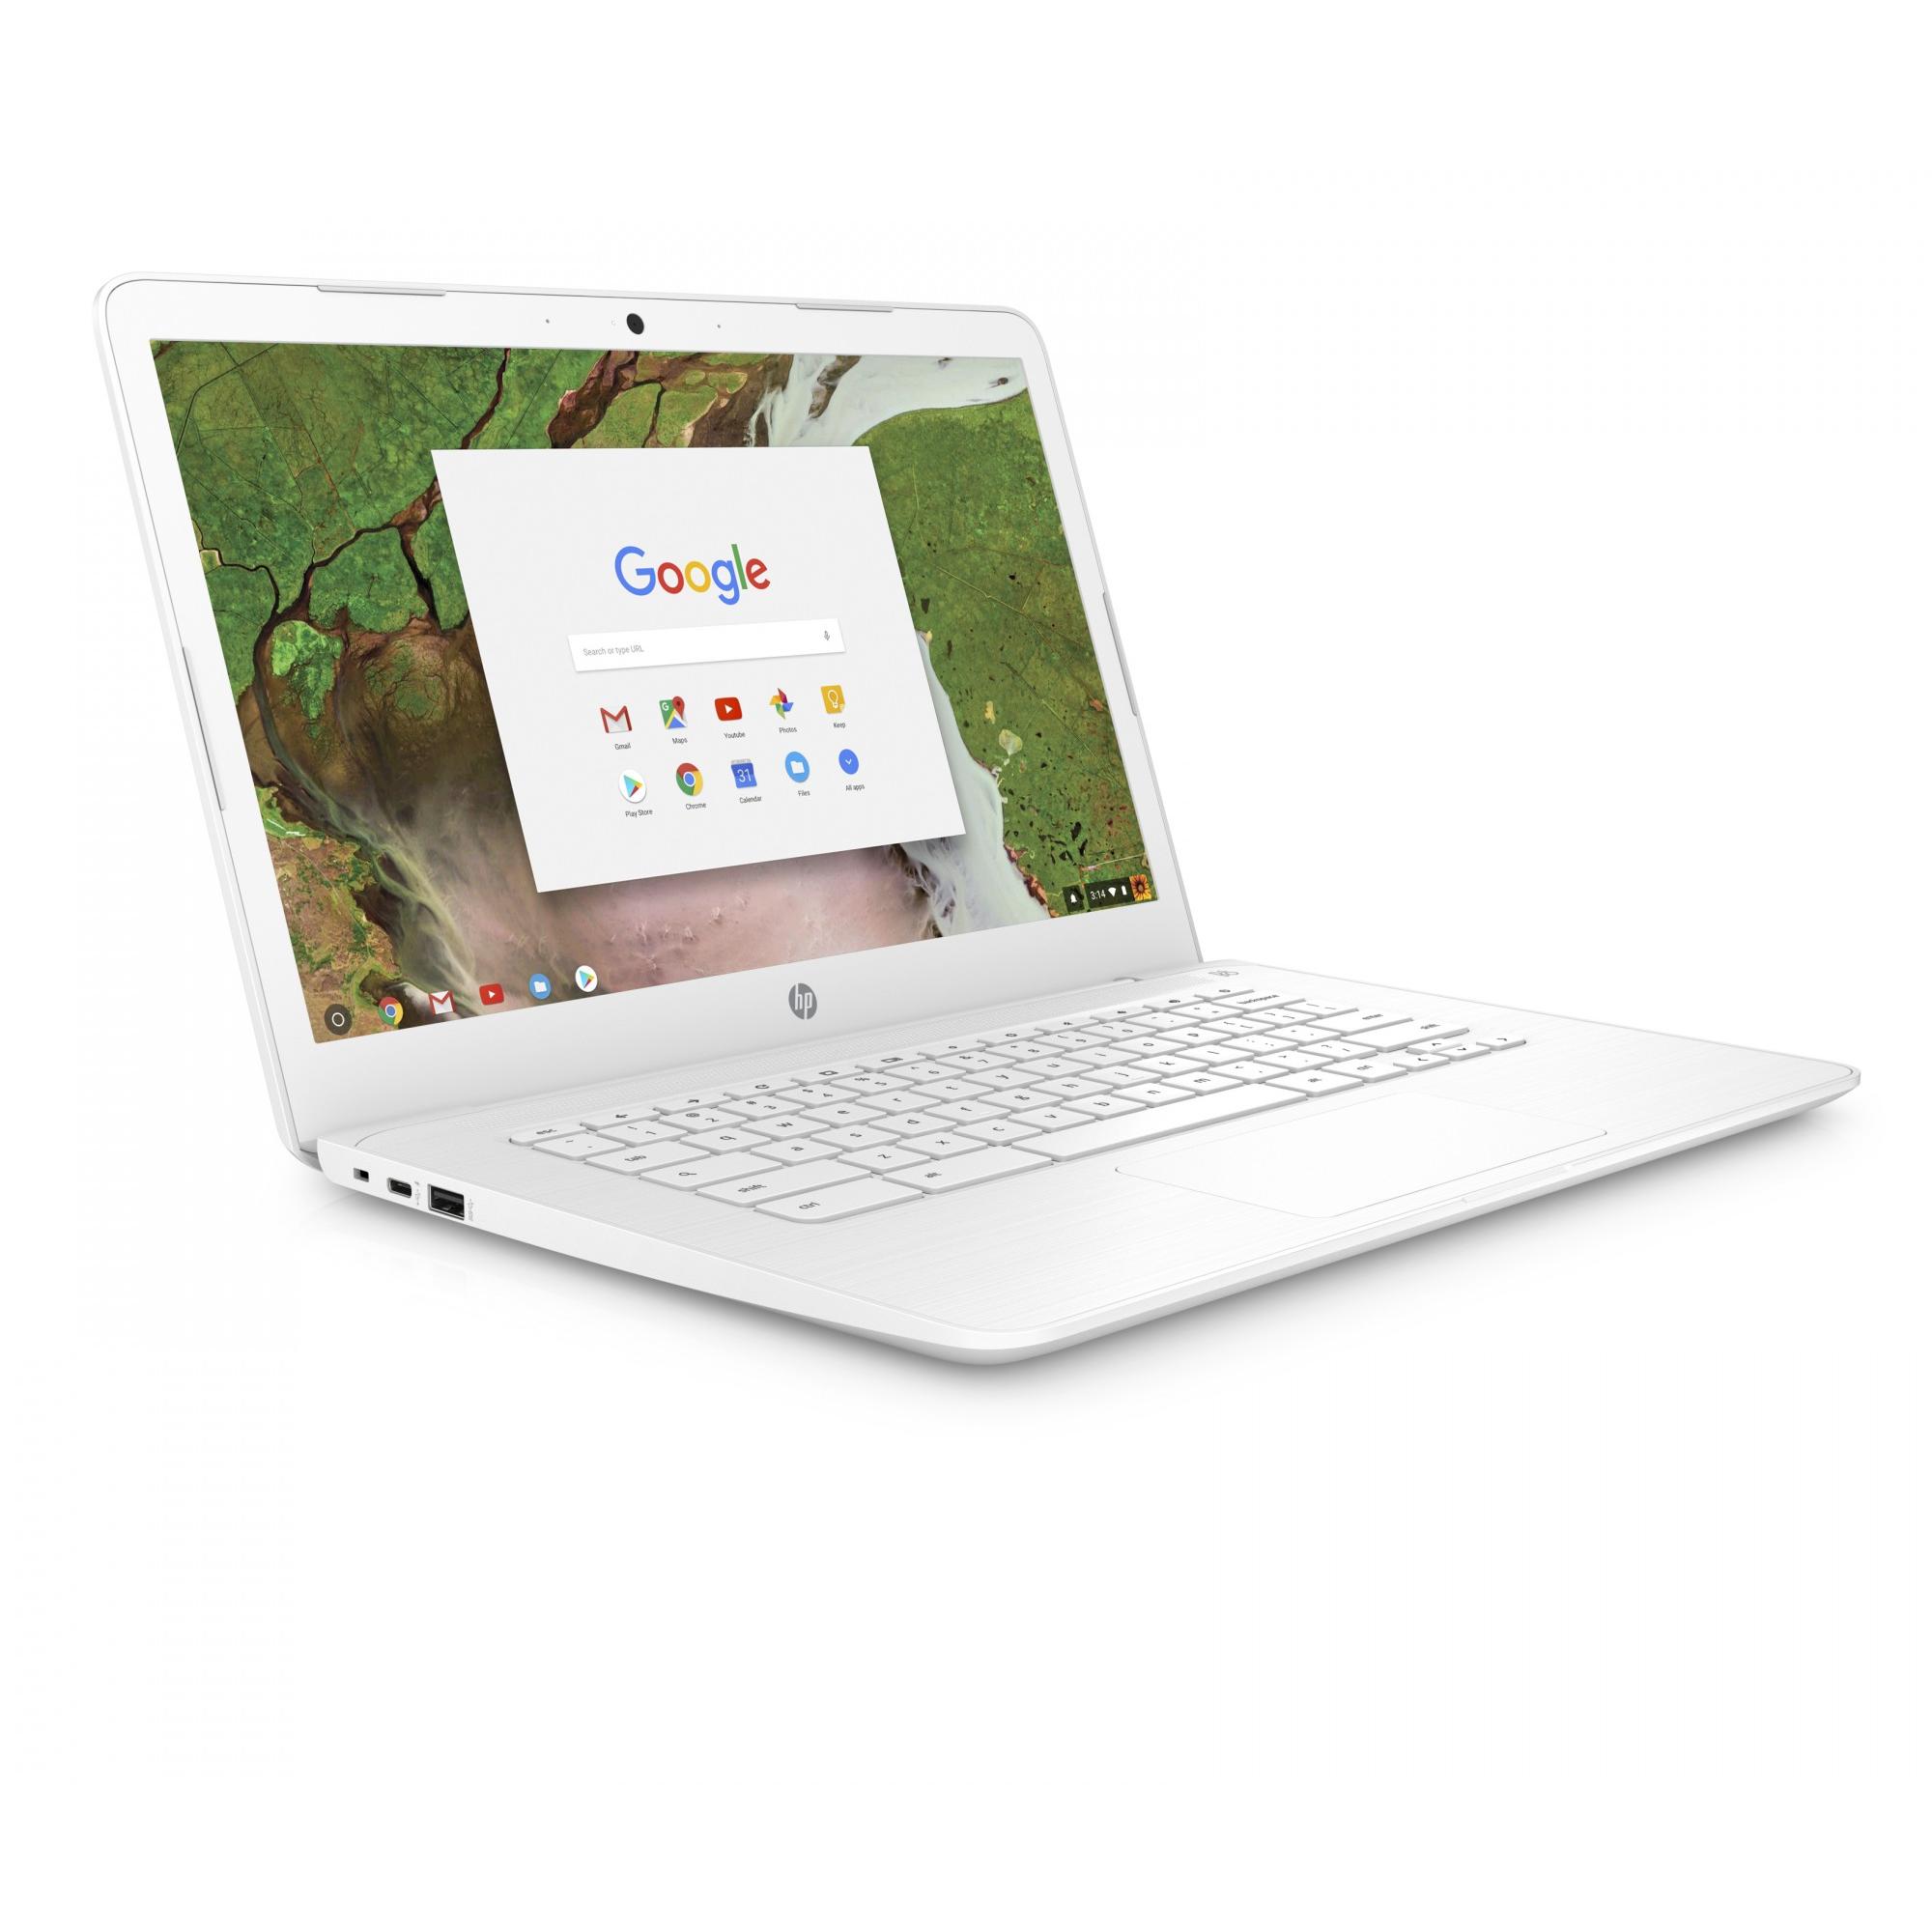 HP Chromebook 14, 14" Full HD Display, Intel Celeron N3350, Intel HD Graphics 500, 32GB eMMC, 4GB SDRAM, B&O Play Audio, Snow White, 14-ca051wm - image 3 of 5